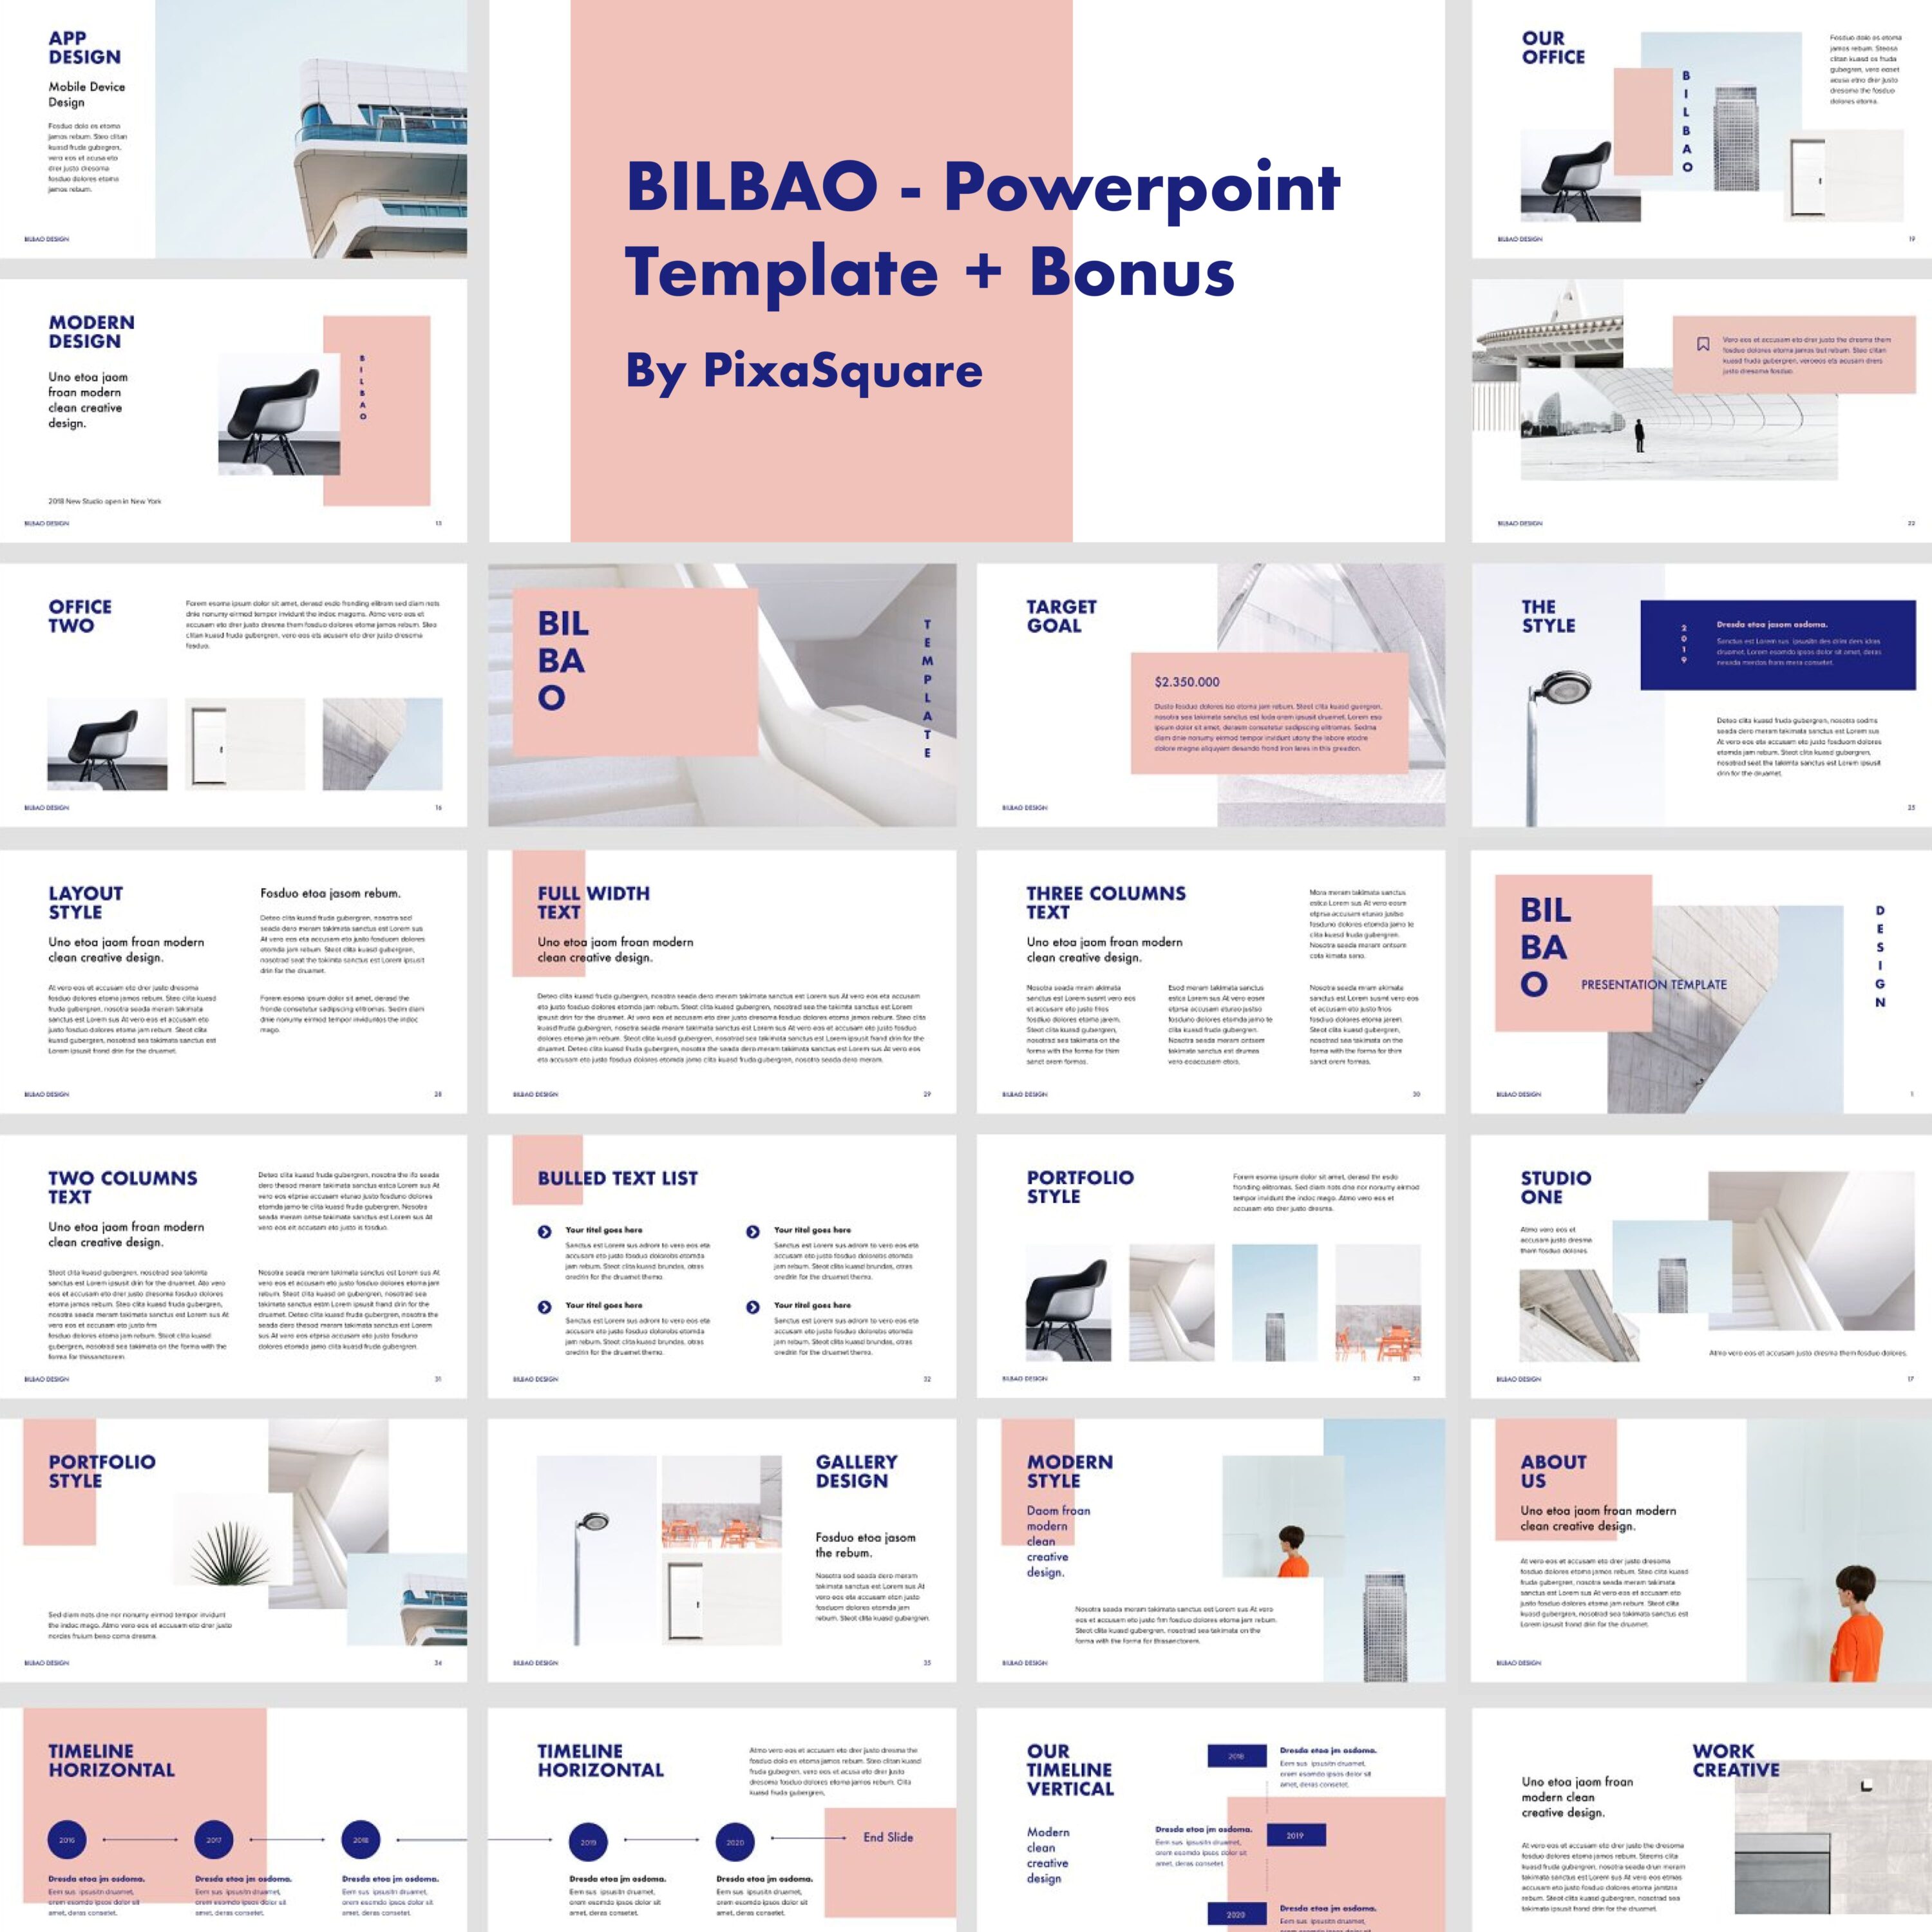 BILBAO - Powerpoint Template + Bonus.